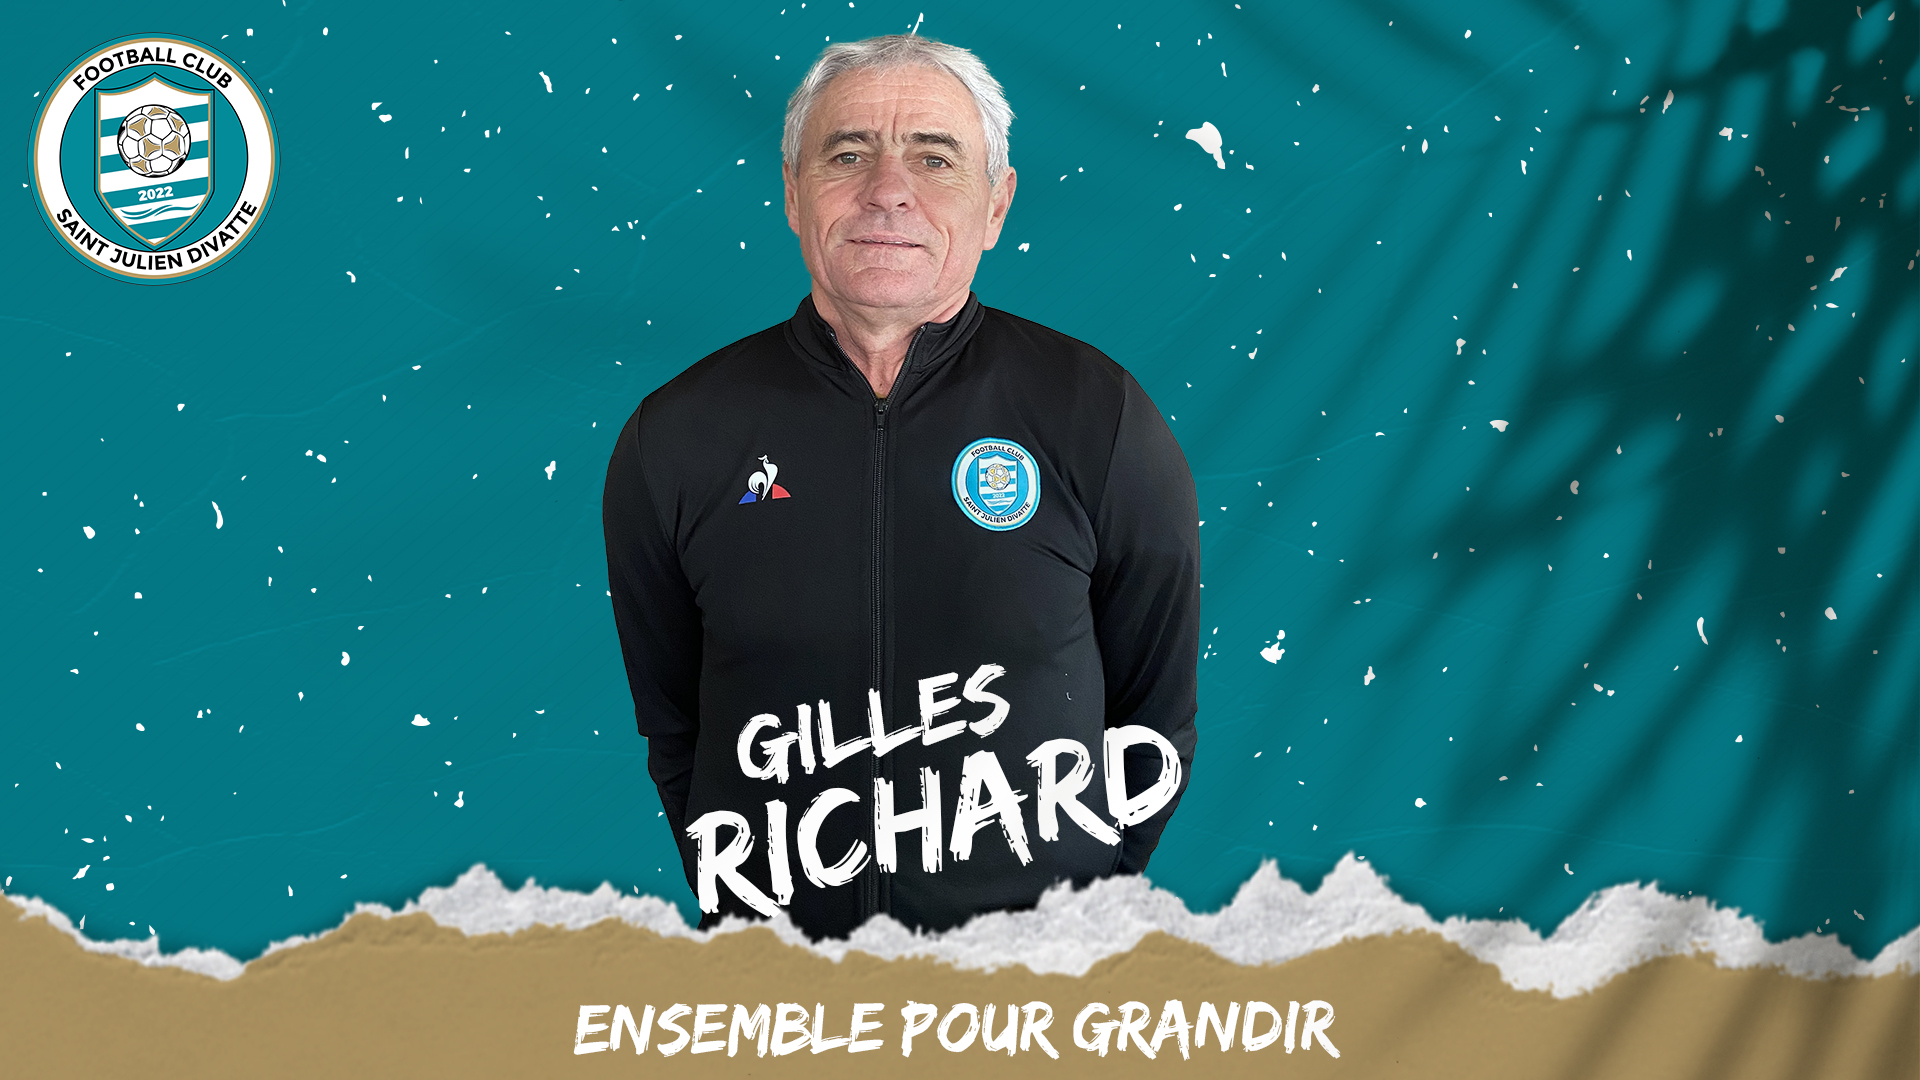 Bénévole fcsjd - Gilles Richard - bar traceurs terrains